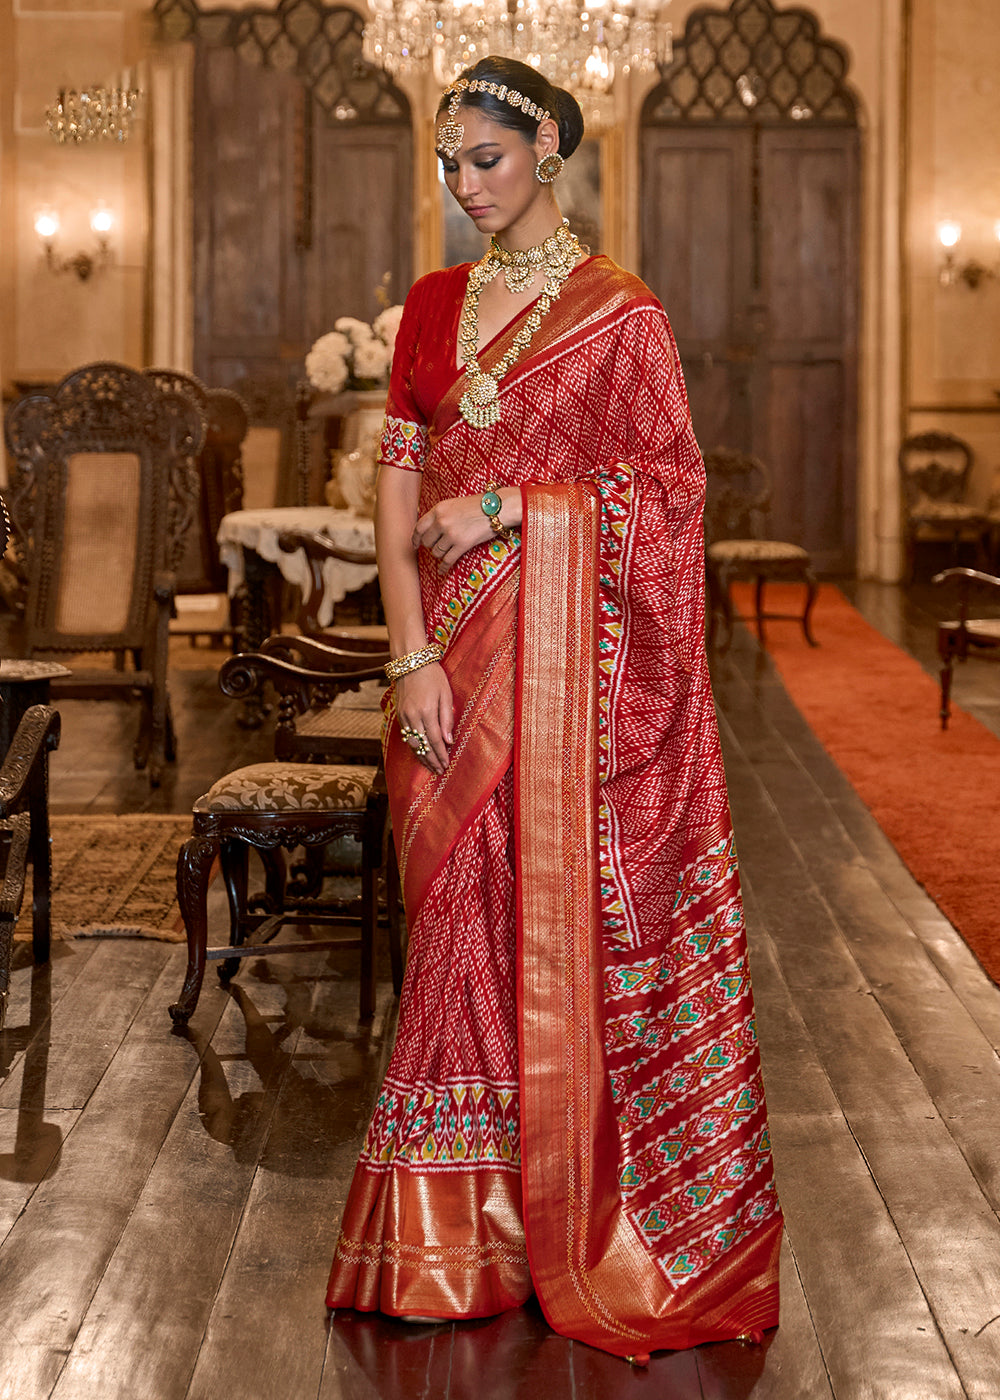 Red Saree(sari) - Buy Indian Red Sarees On All Fabric and Designs